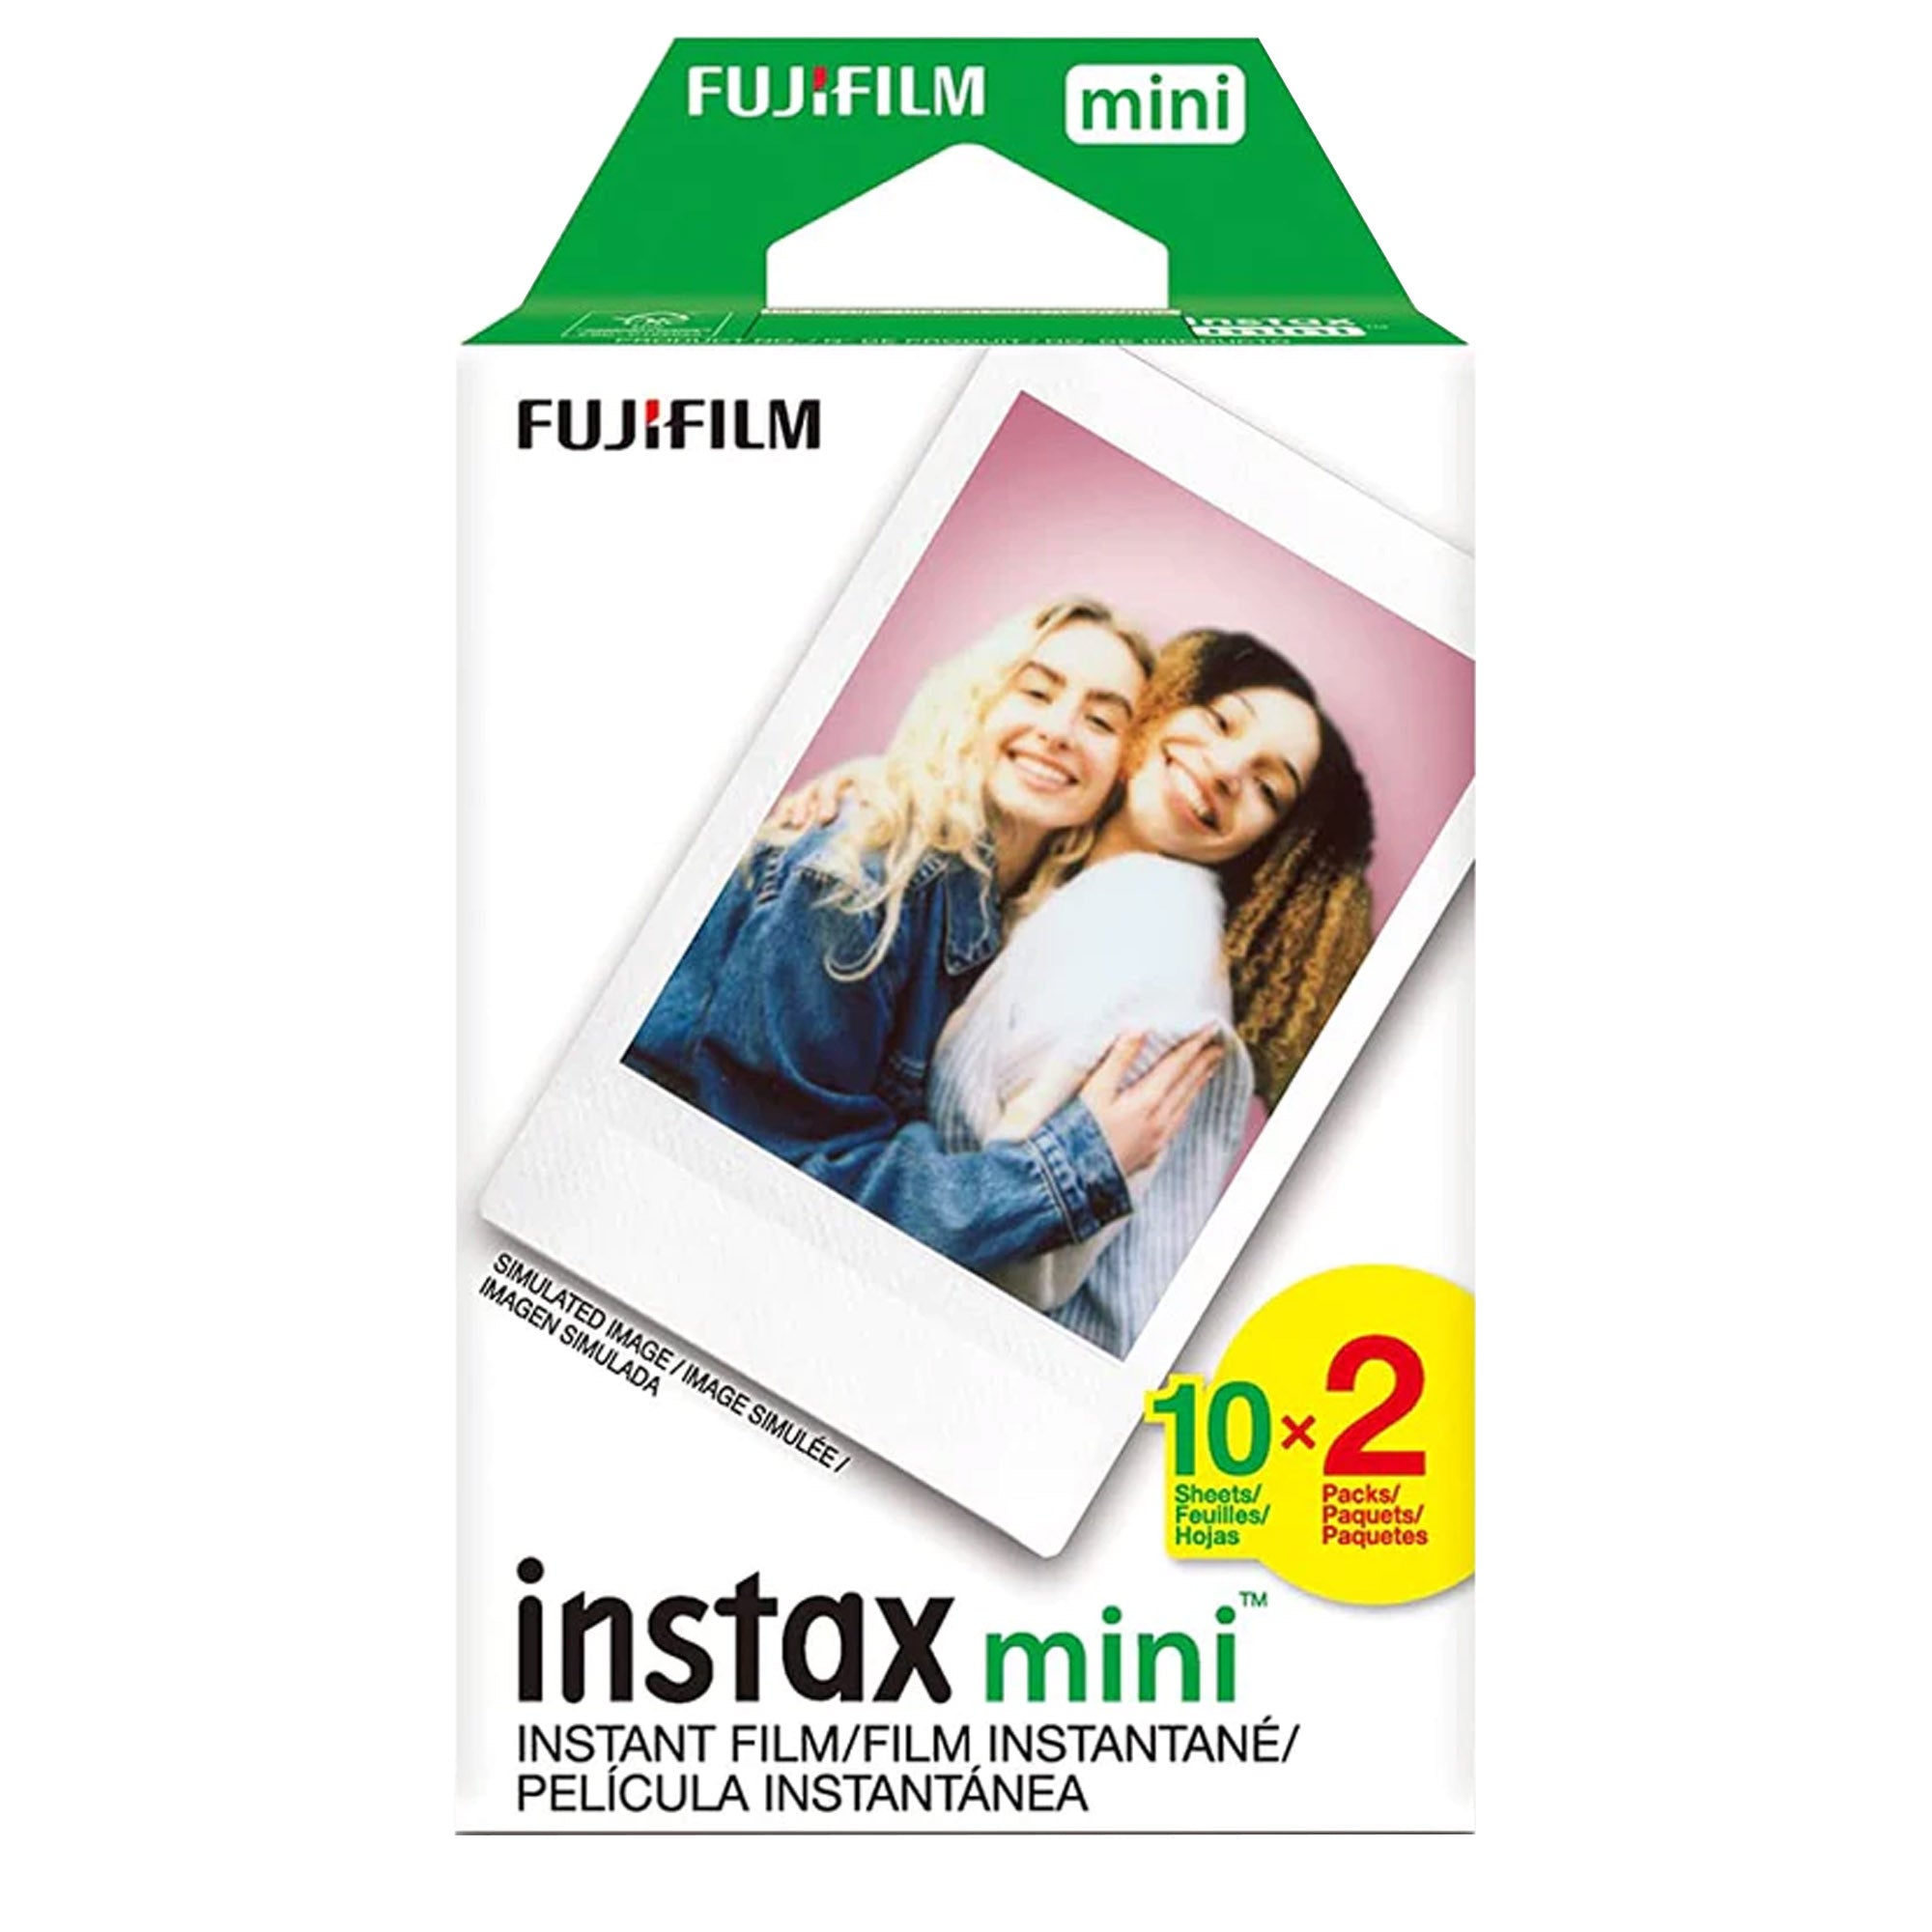 Essentials Bundle for Fujifilm Instax Mini Film Camera with 40 Color Prints